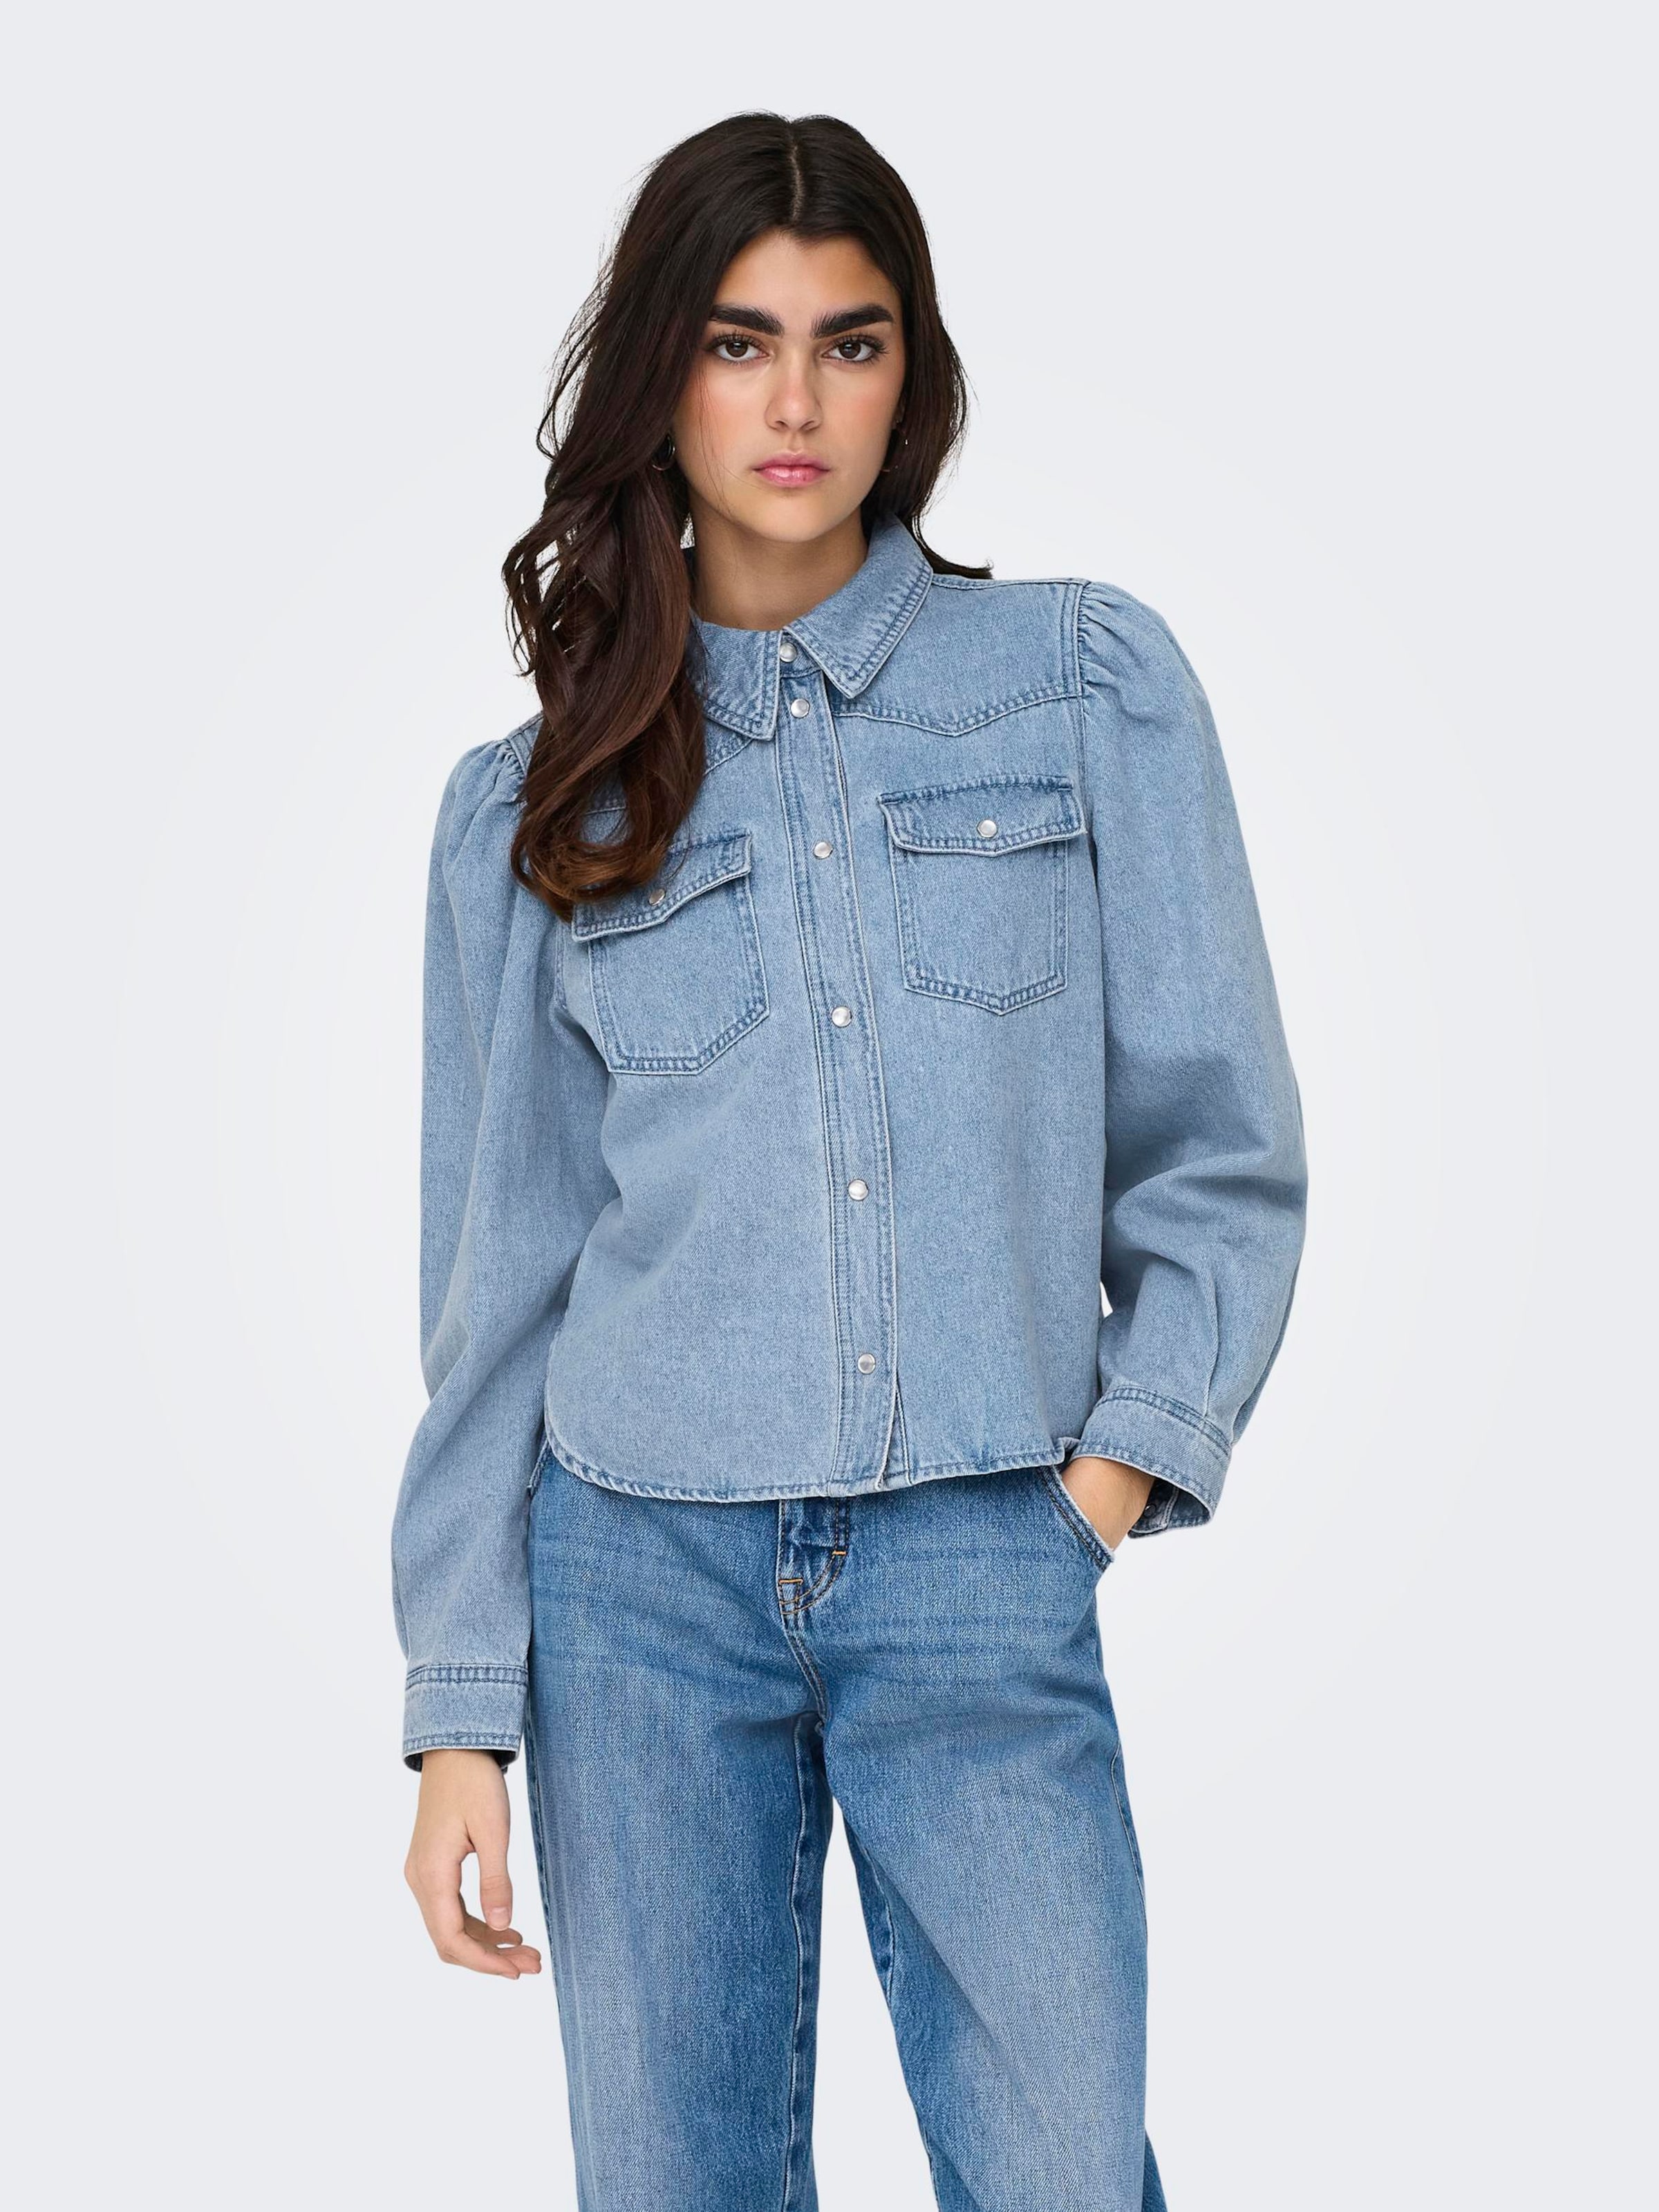 Mango Cotton denim long shirt sleeve 77096714-FRIDA-LM 77096714 Jean size 2  | eBay